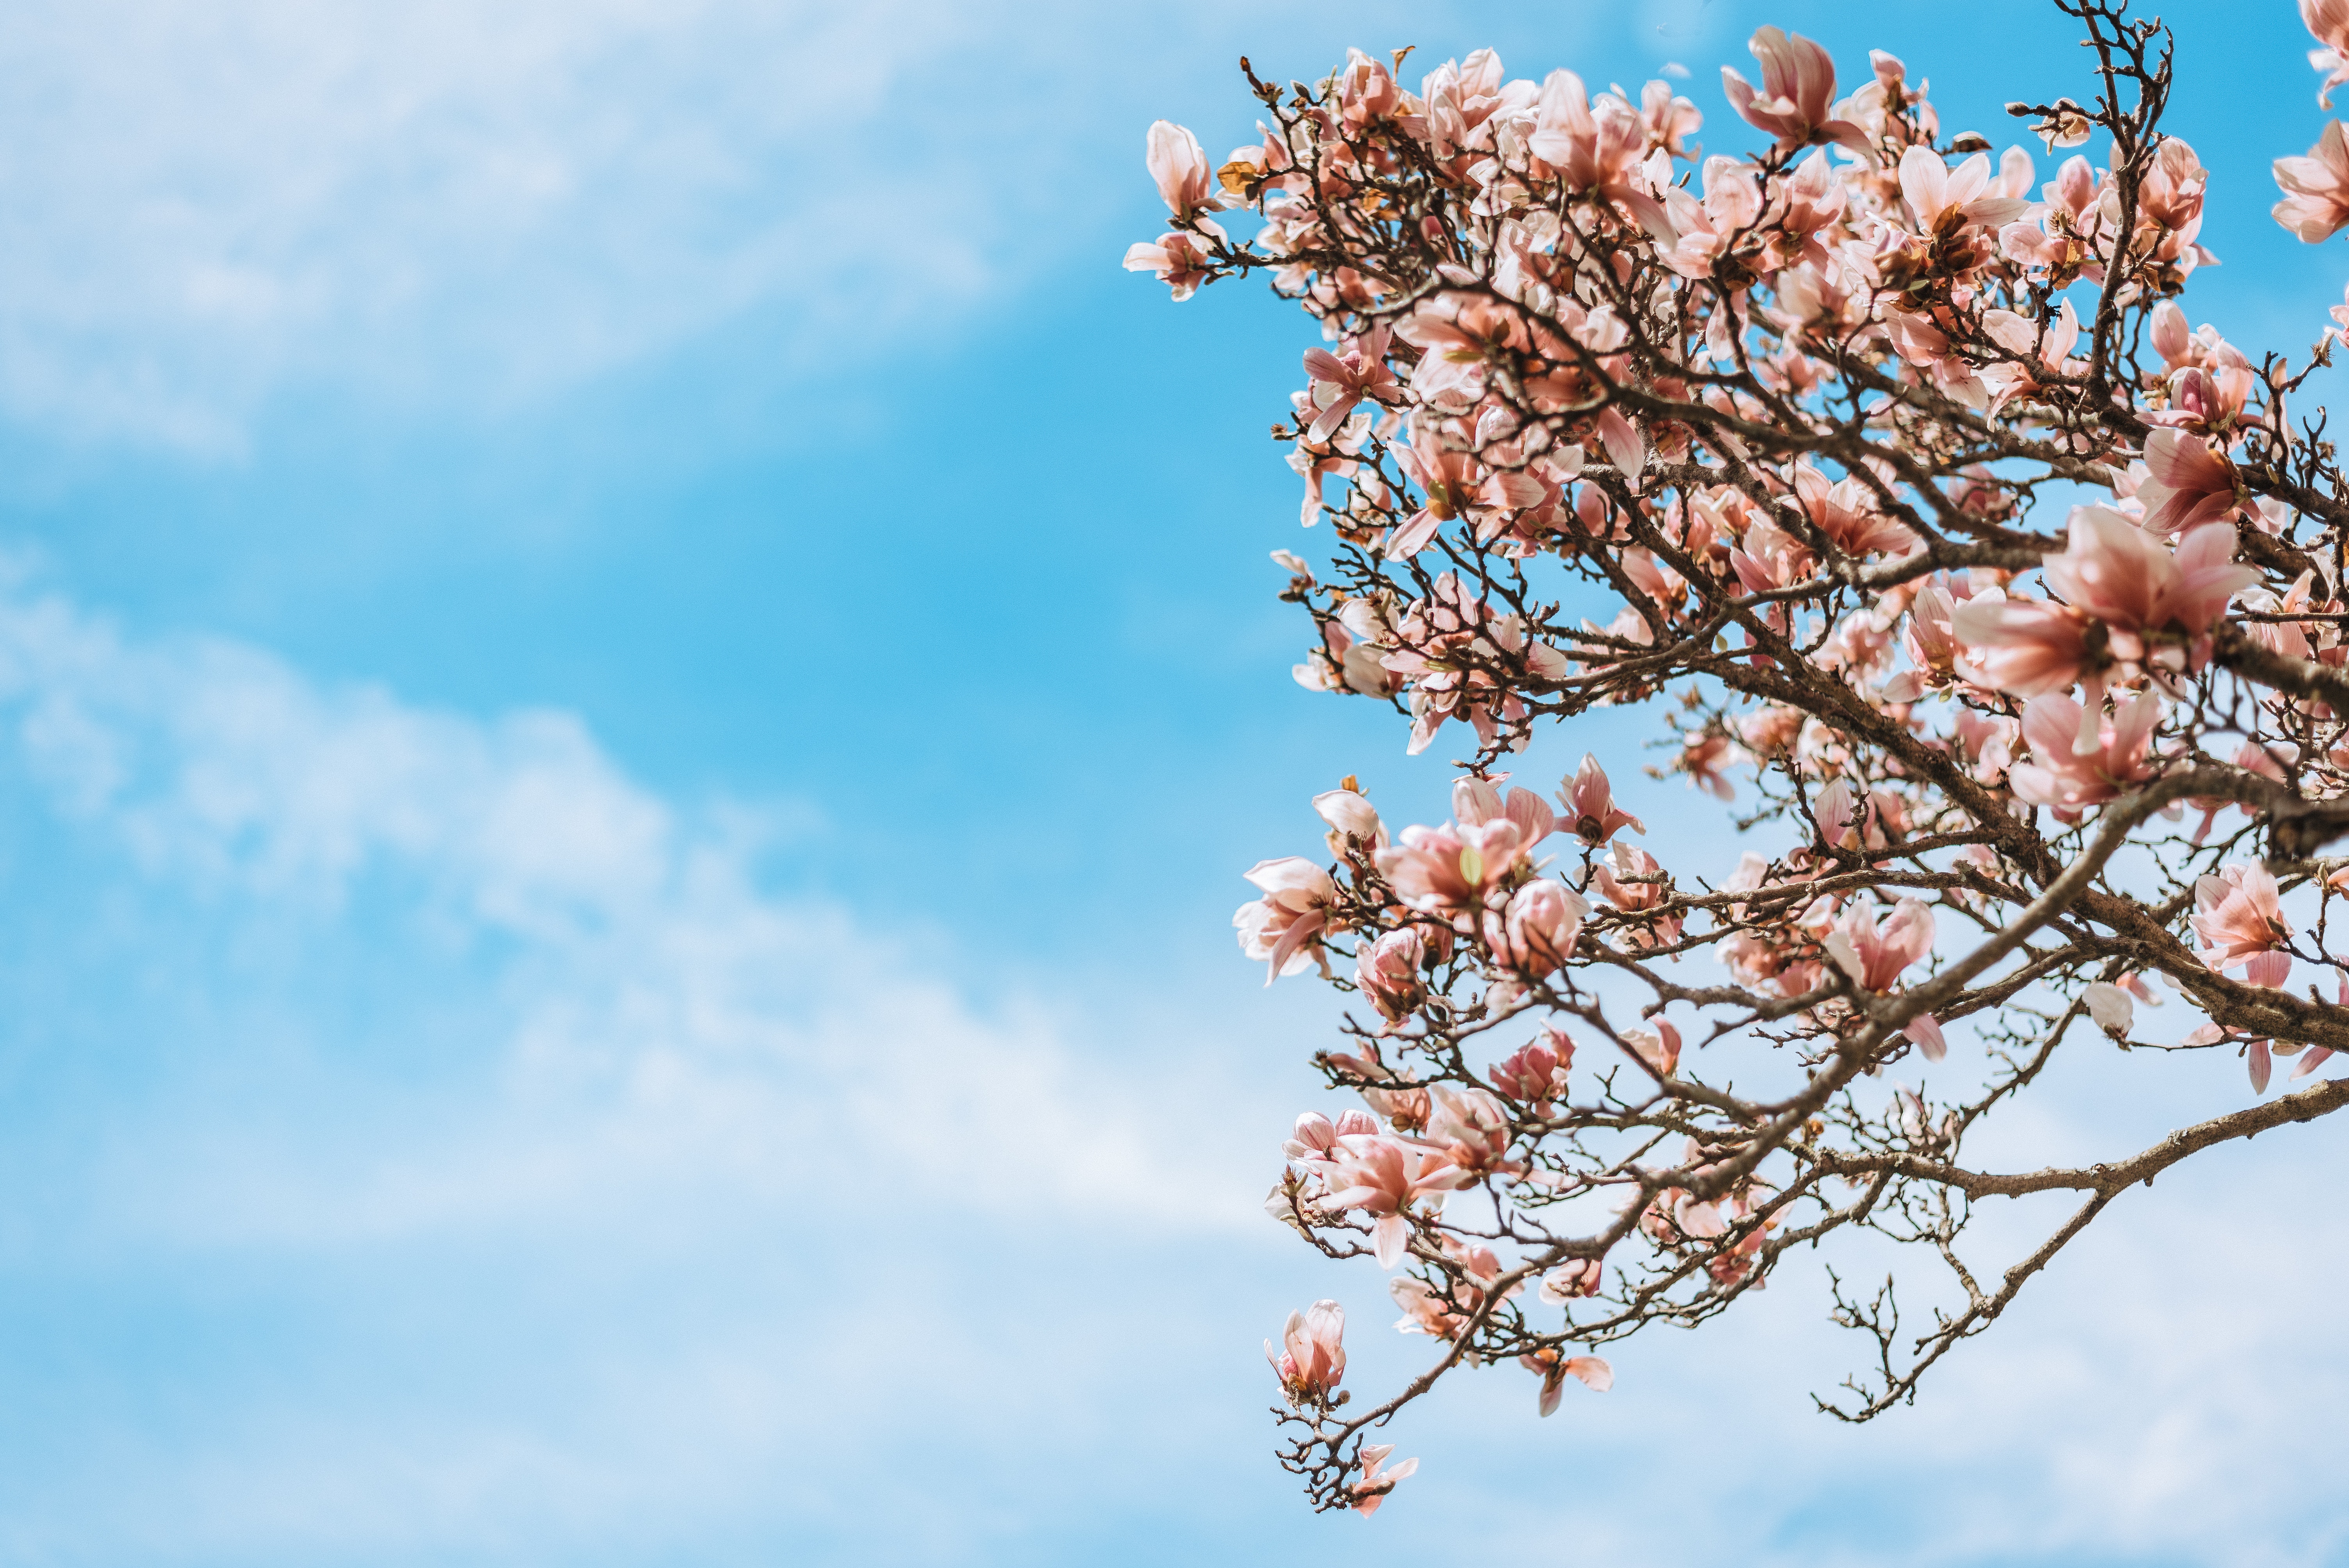 135944 Salvapantallas y fondos de pantalla Sakura en tu teléfono. Descarga imágenes de flores, sakura, madera, árbol, sucursales, ramas, florecer, floración gratis